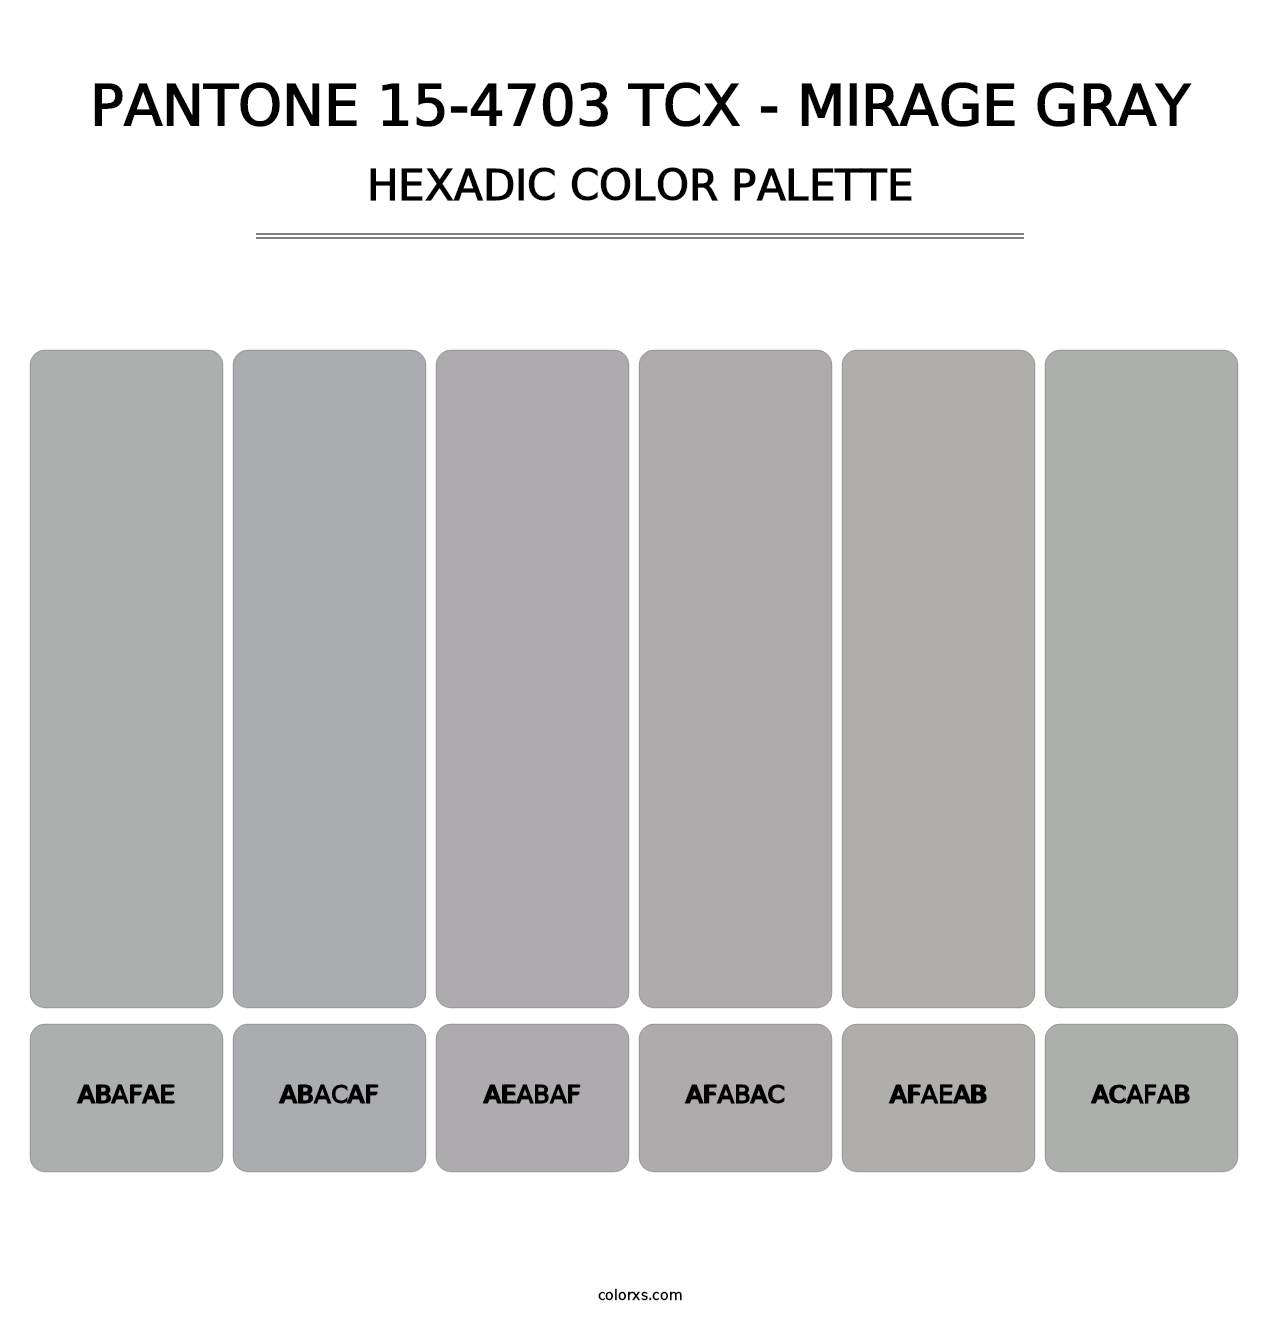 PANTONE 15-4703 TCX - Mirage Gray - Hexadic Color Palette